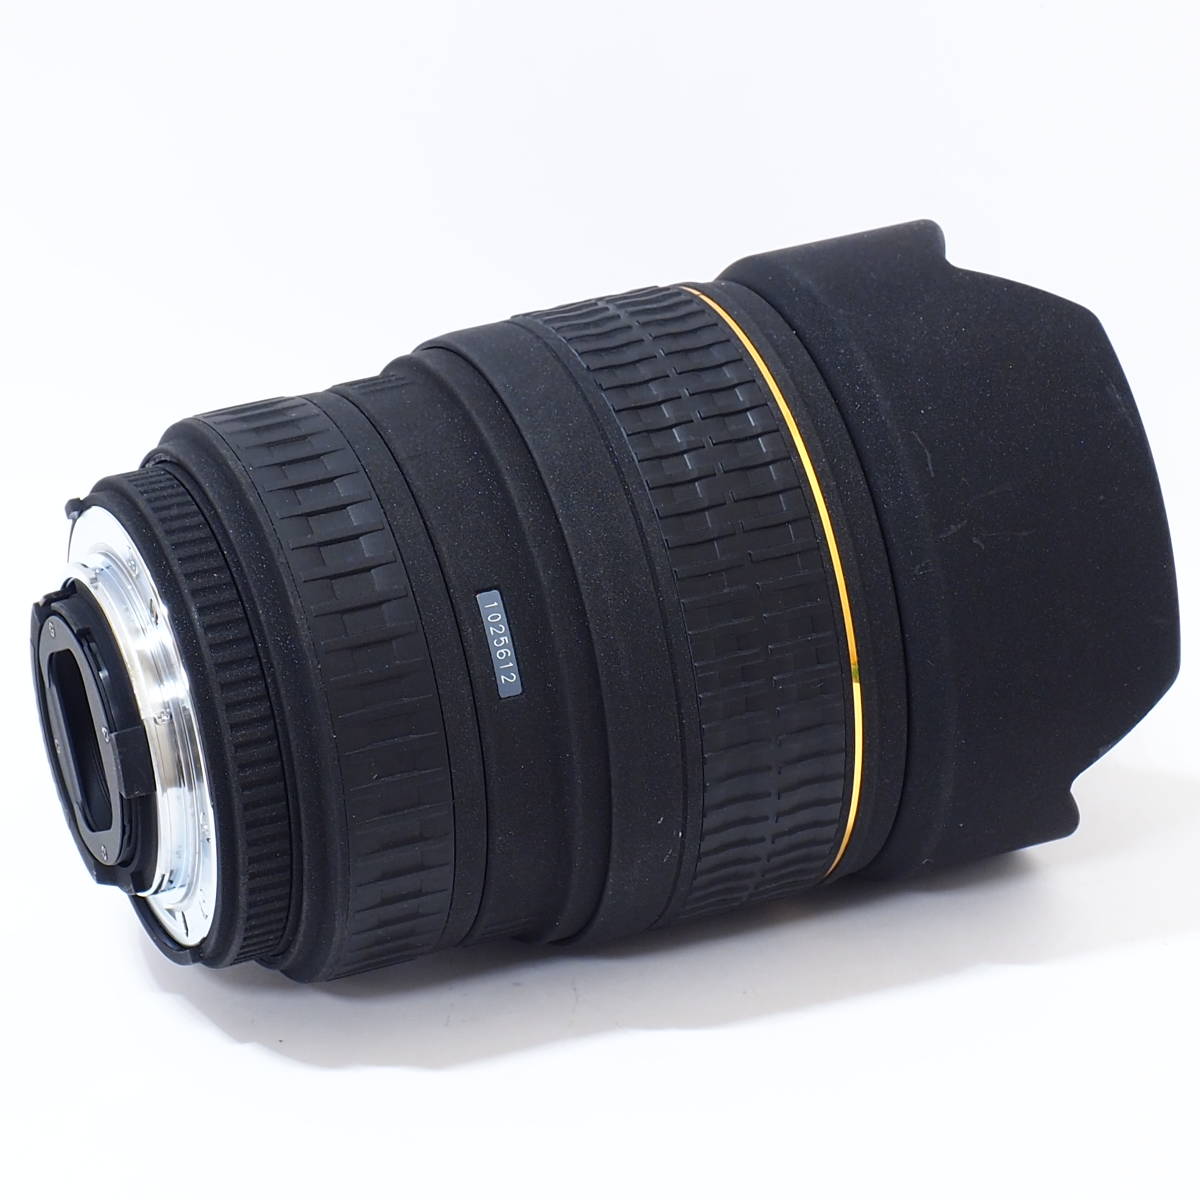 SIGMA 15-30mm F3.5-4.5 EX DG ASPHERICAL IF for Nikon F Mount Full